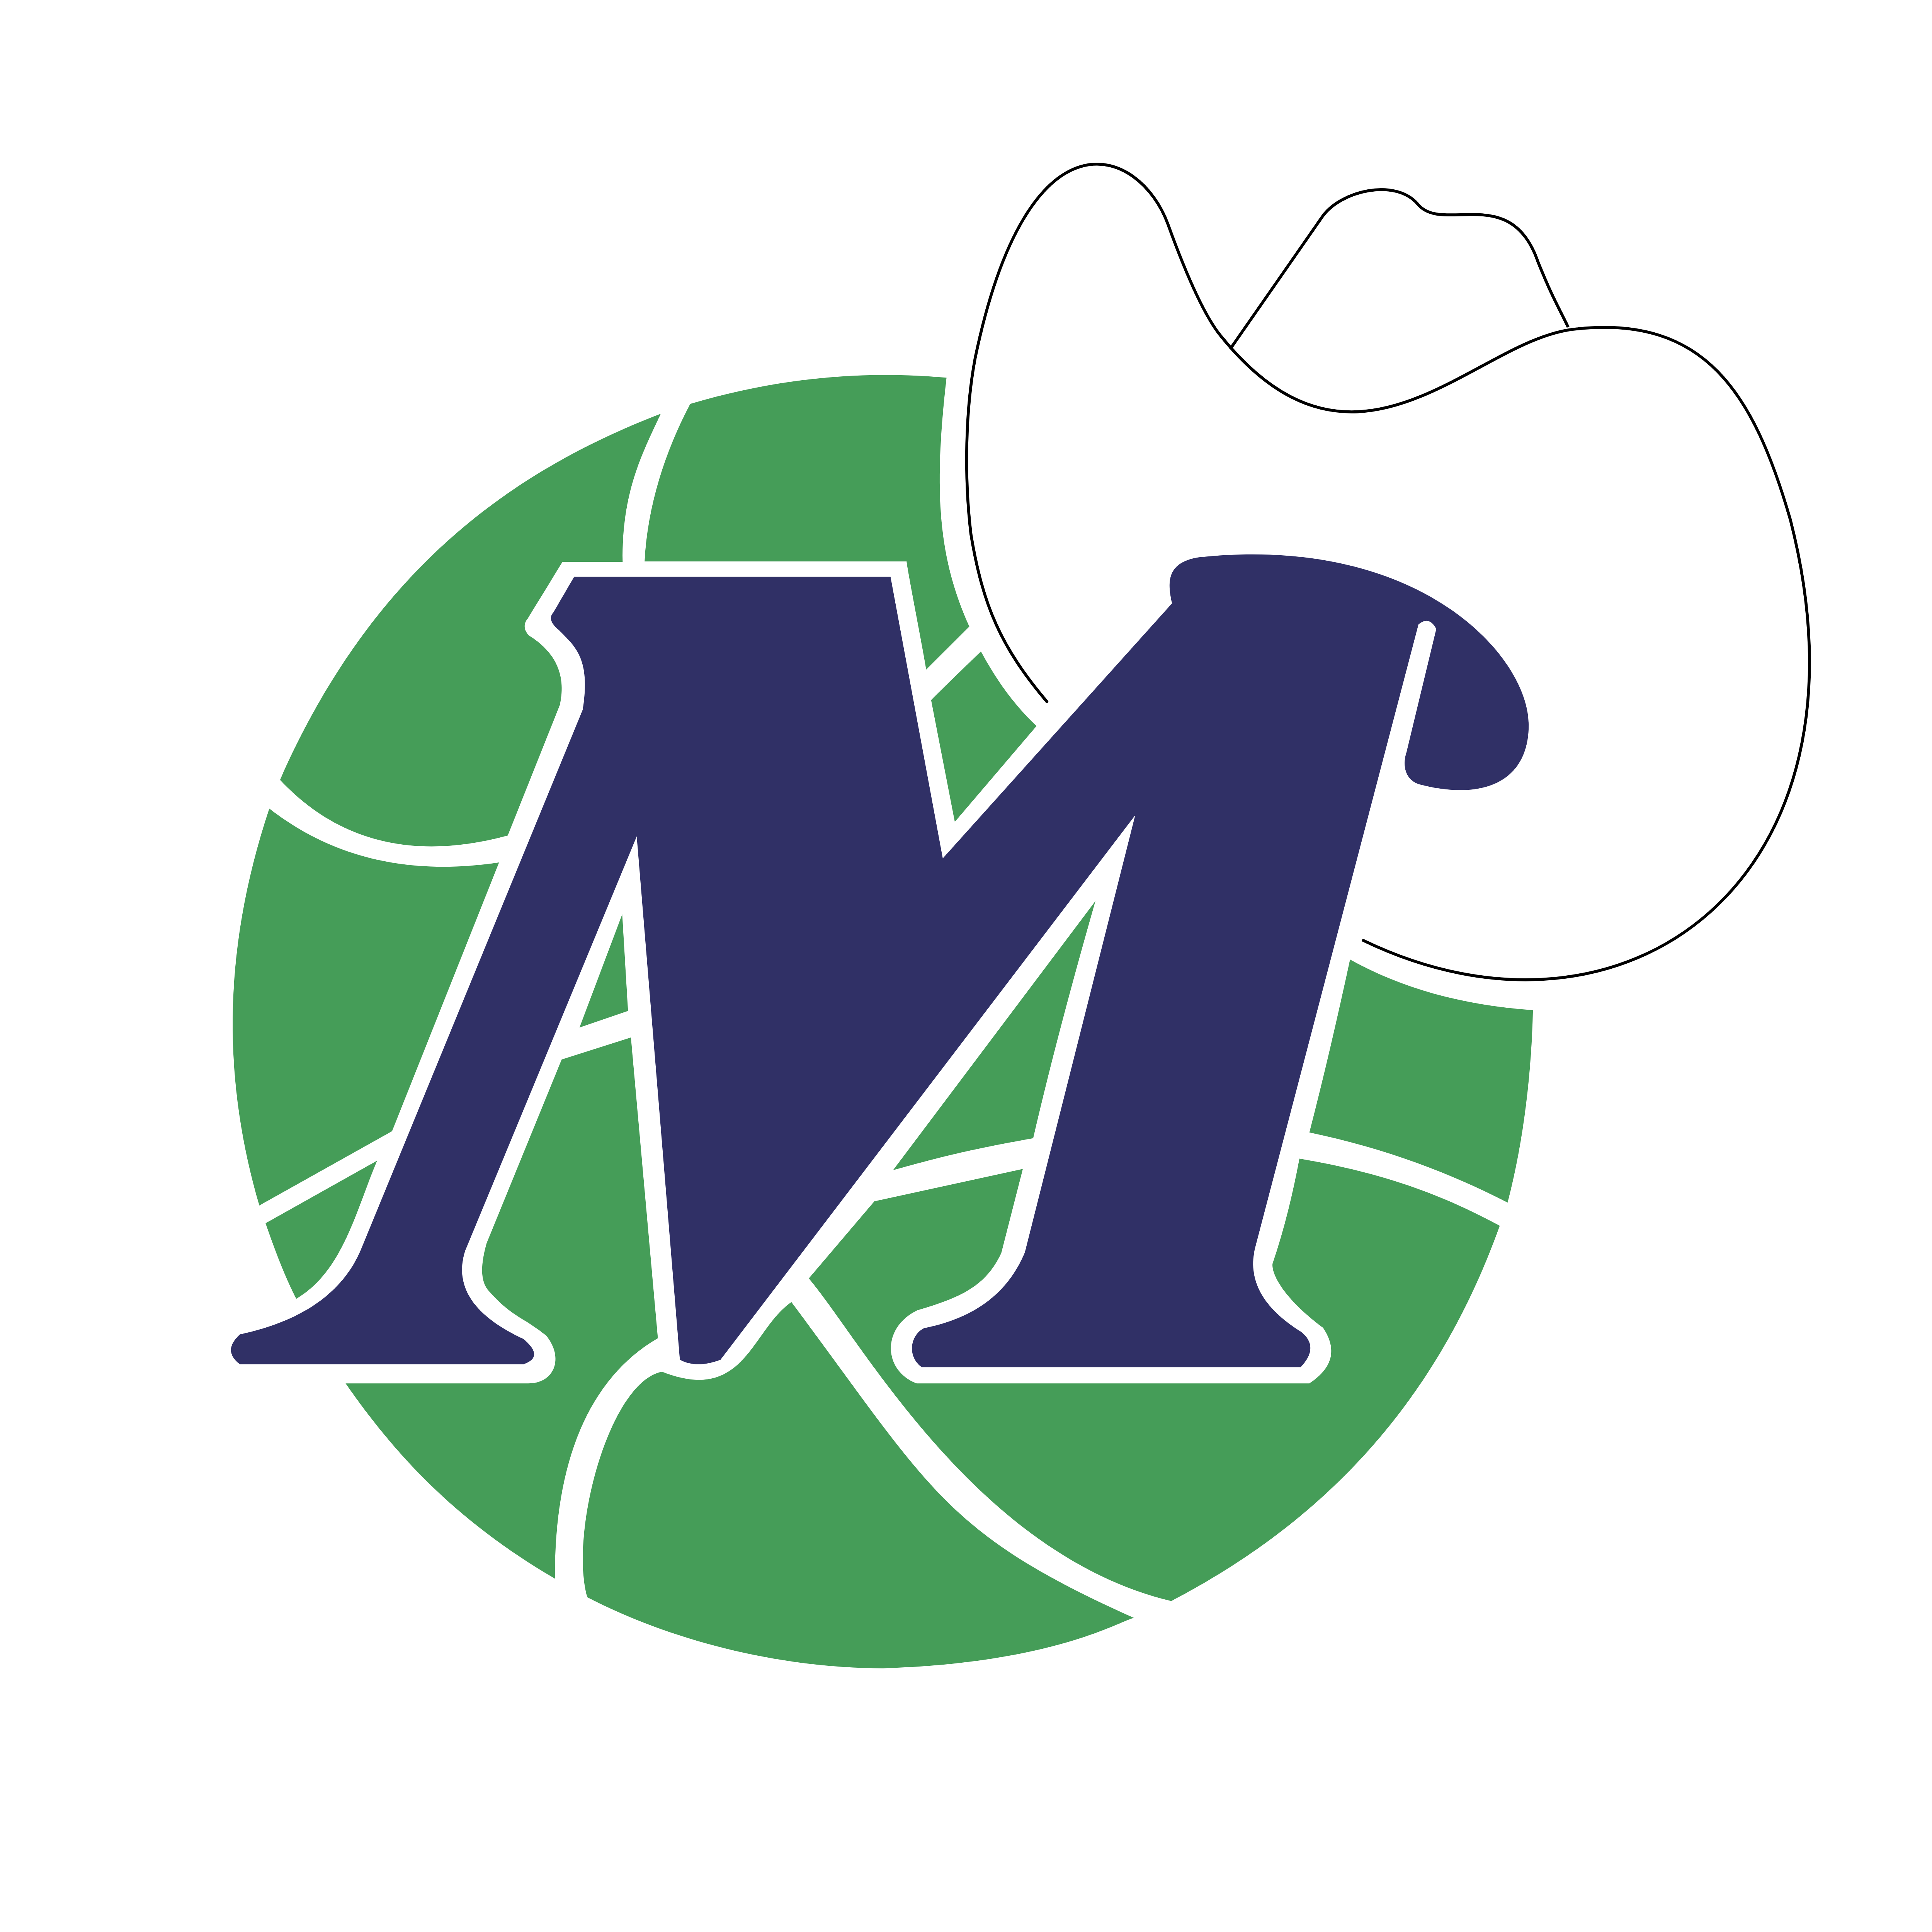 Dallas Mavericks - Logos Download